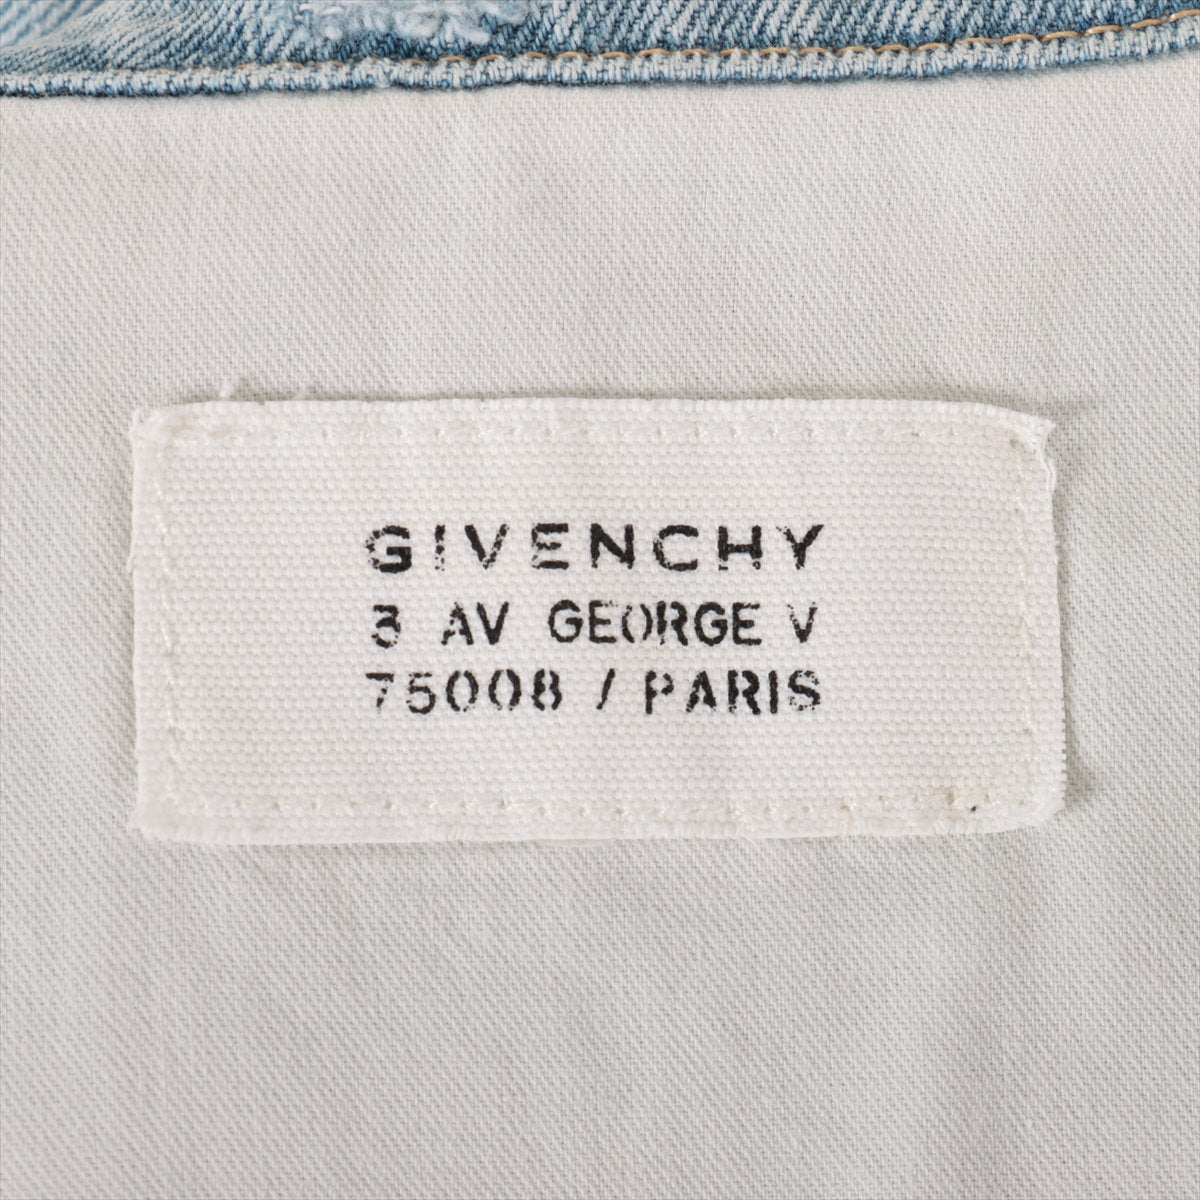 Givenchy Cotton Denim jacket 34 Ladies' Blue  BW008950D1